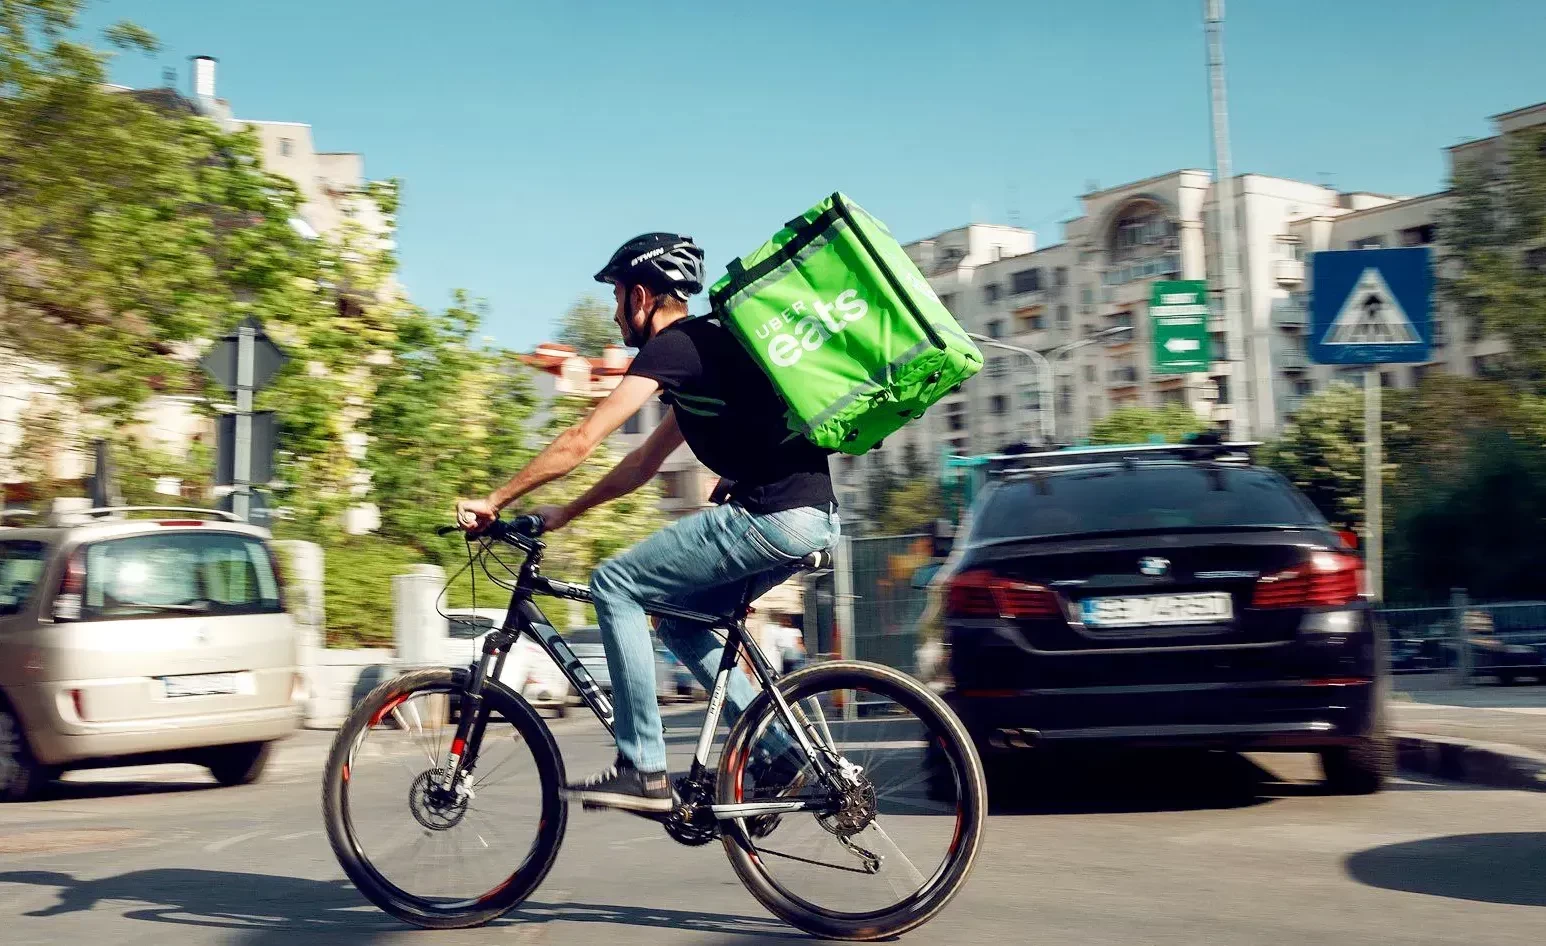 Uber Eats delivery man zips across the road on his bike